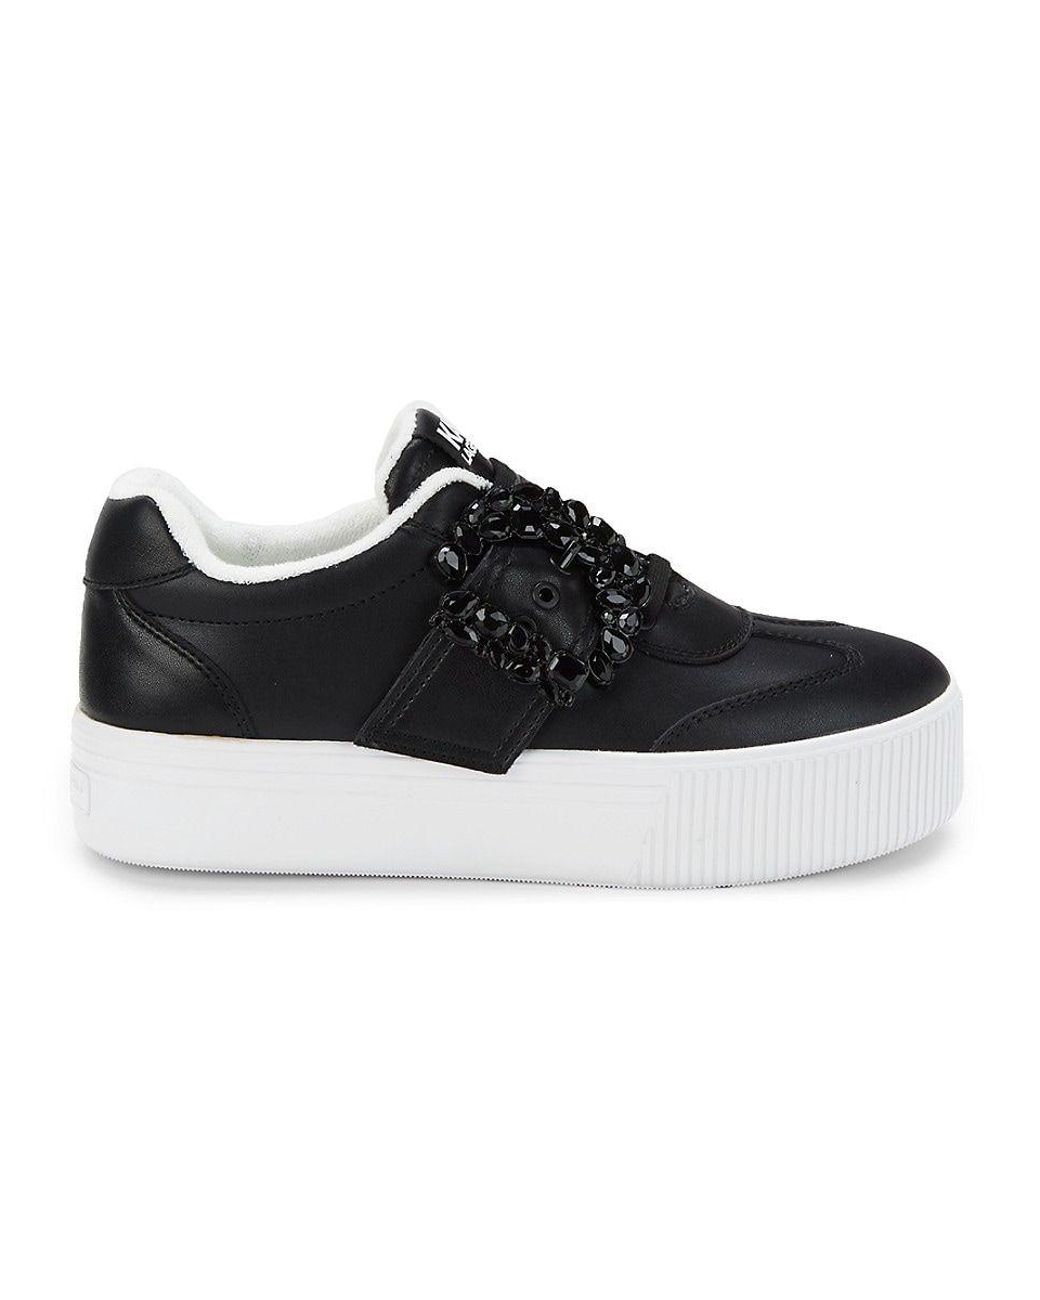 Karl Lagerfeld Buckle Retro Leather Sneakers in Black | Lyst